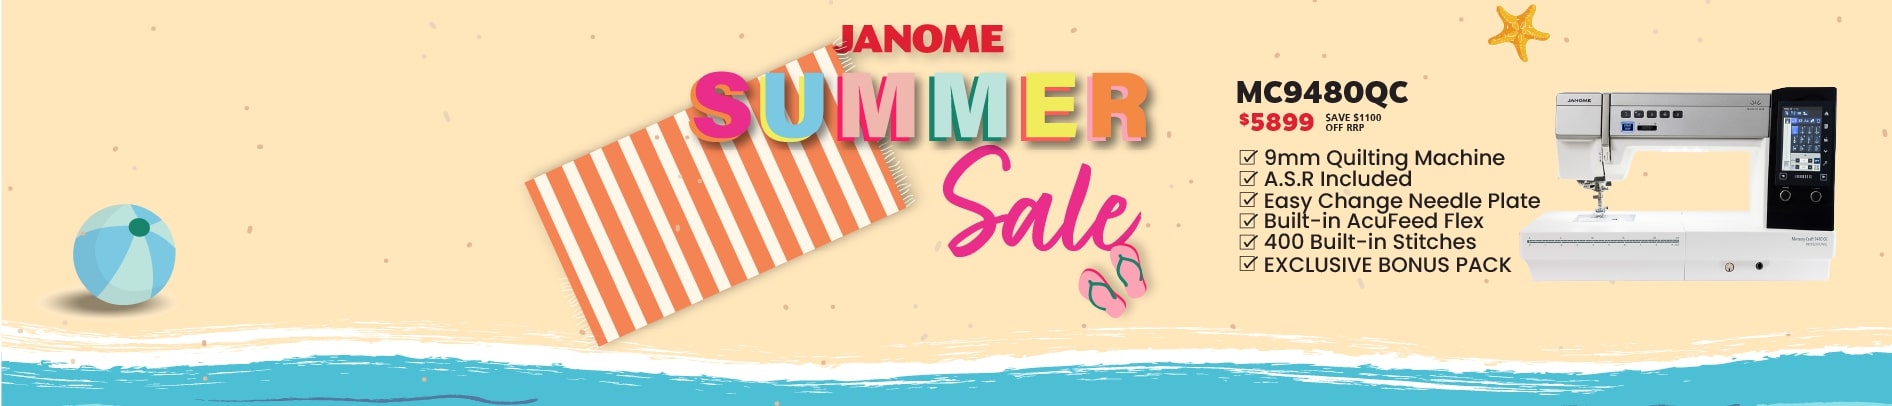 Janome Summer Sale - Banner - MC9480